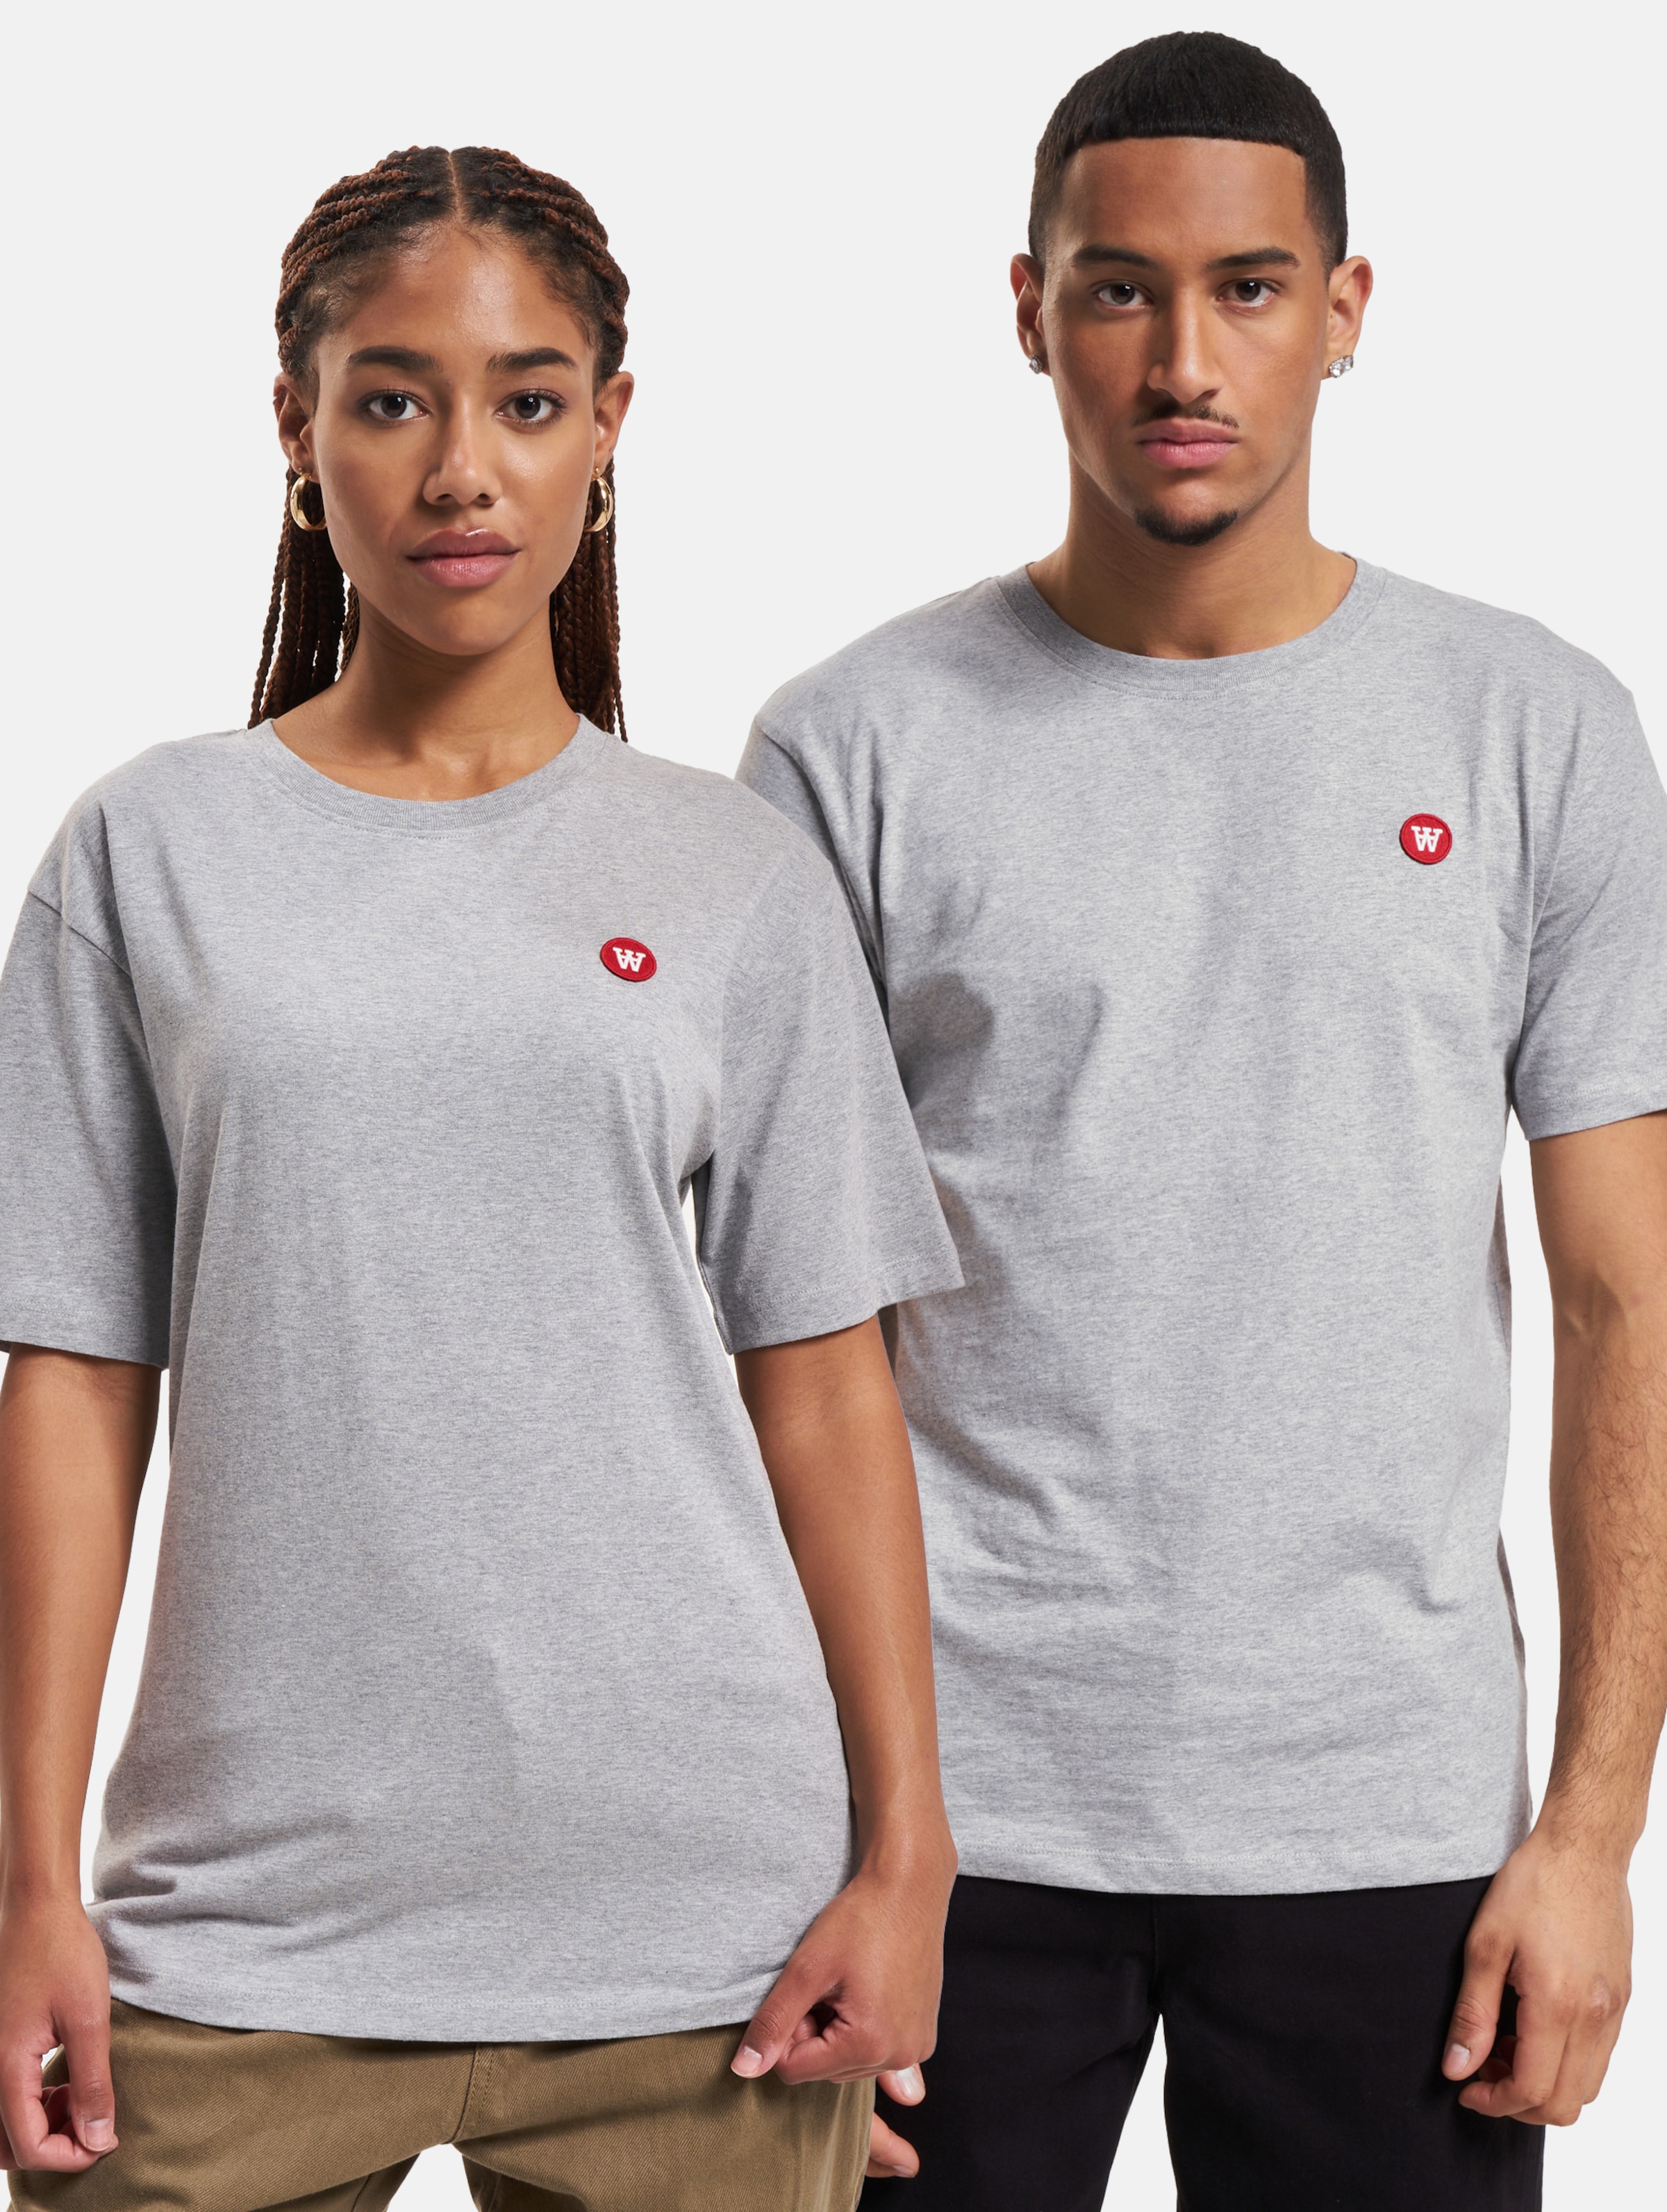 Wood Ace Badge T-Shirt Gots Vrouwen op kleur grijs, Maat XL